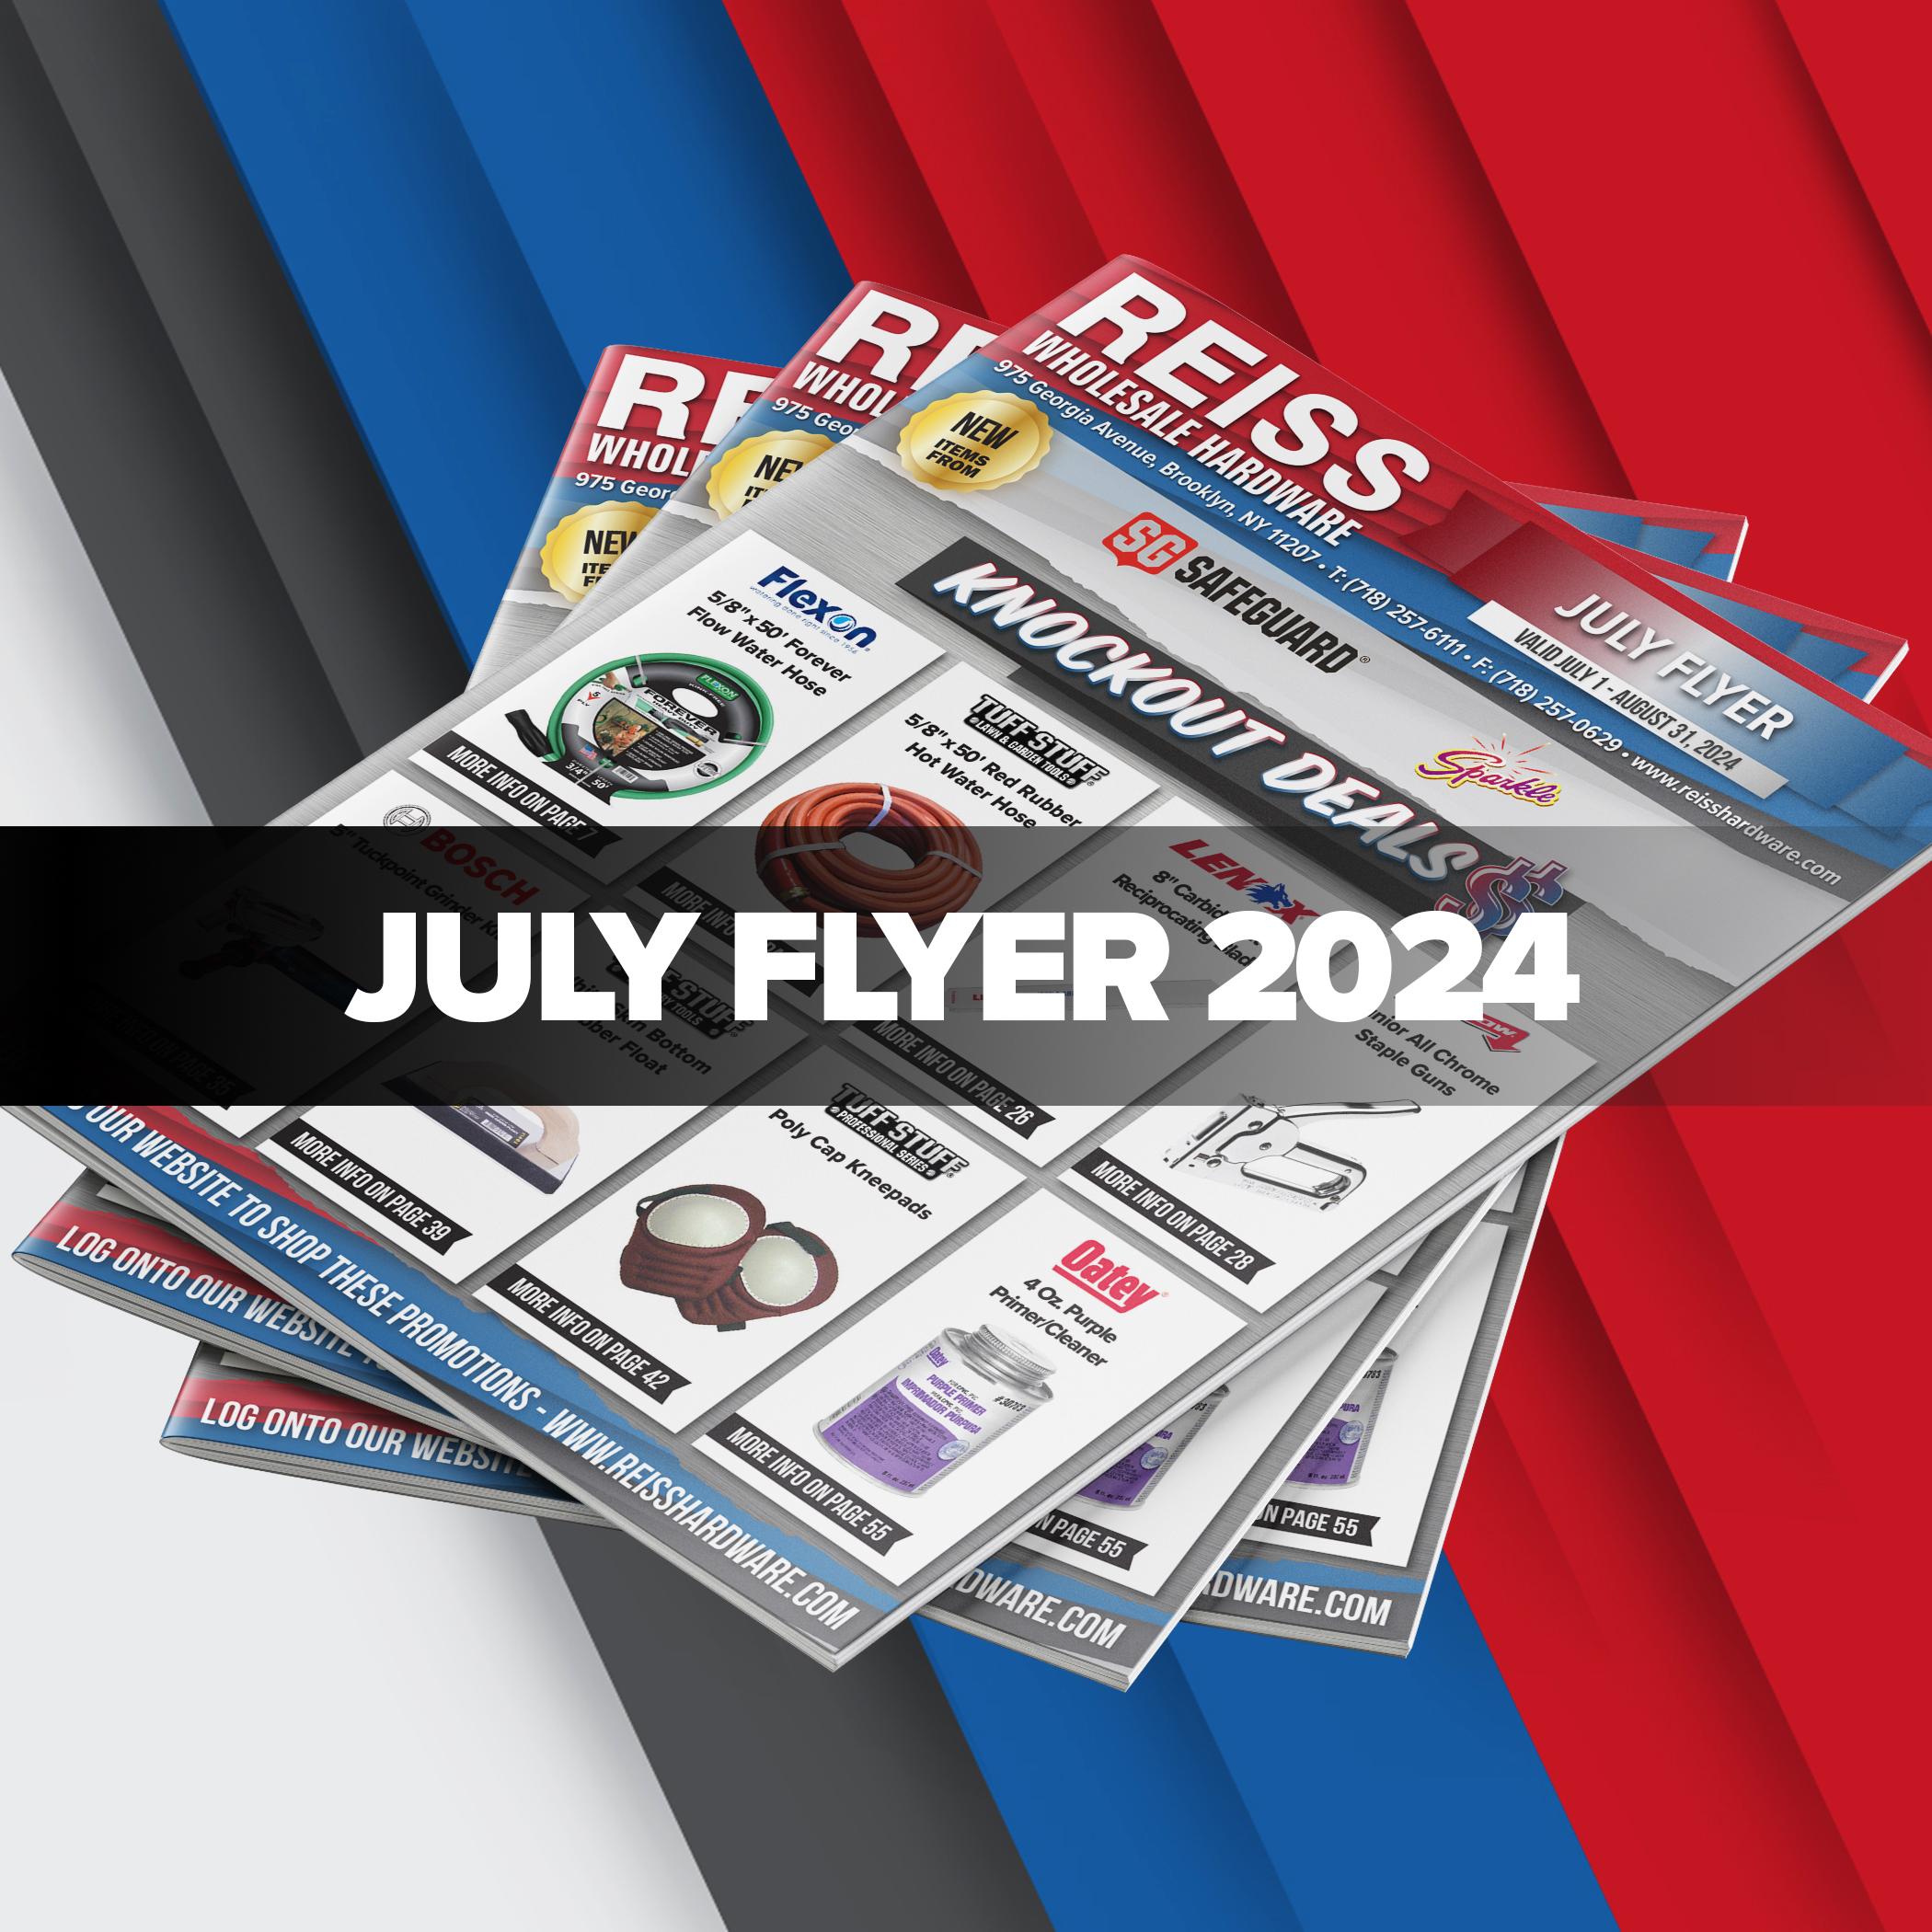 July Flyer 2024